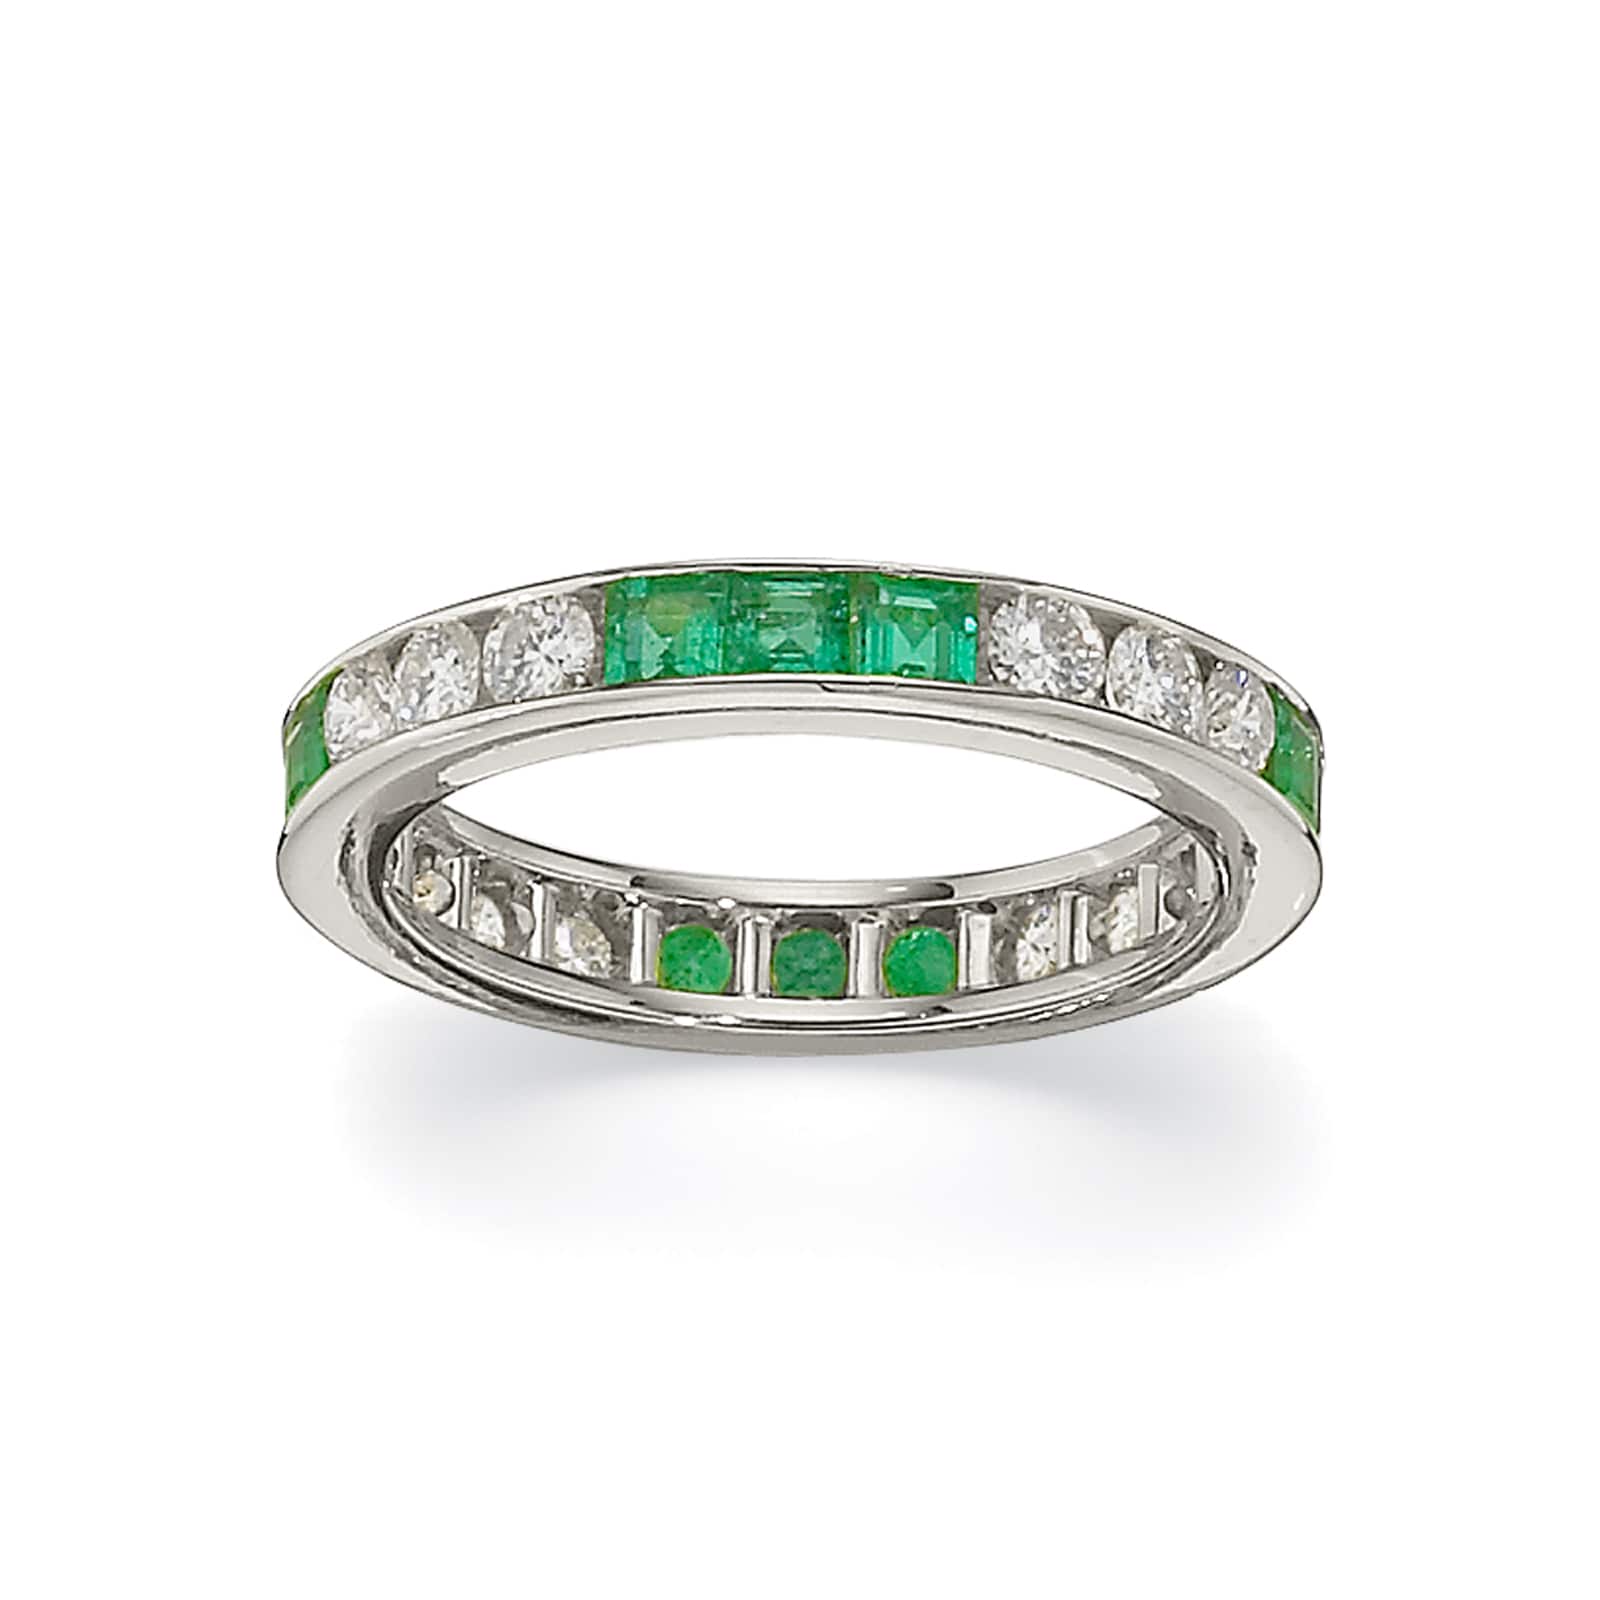 Platinum Wedding Rings, Wedding Rings, Rings, Jewelry